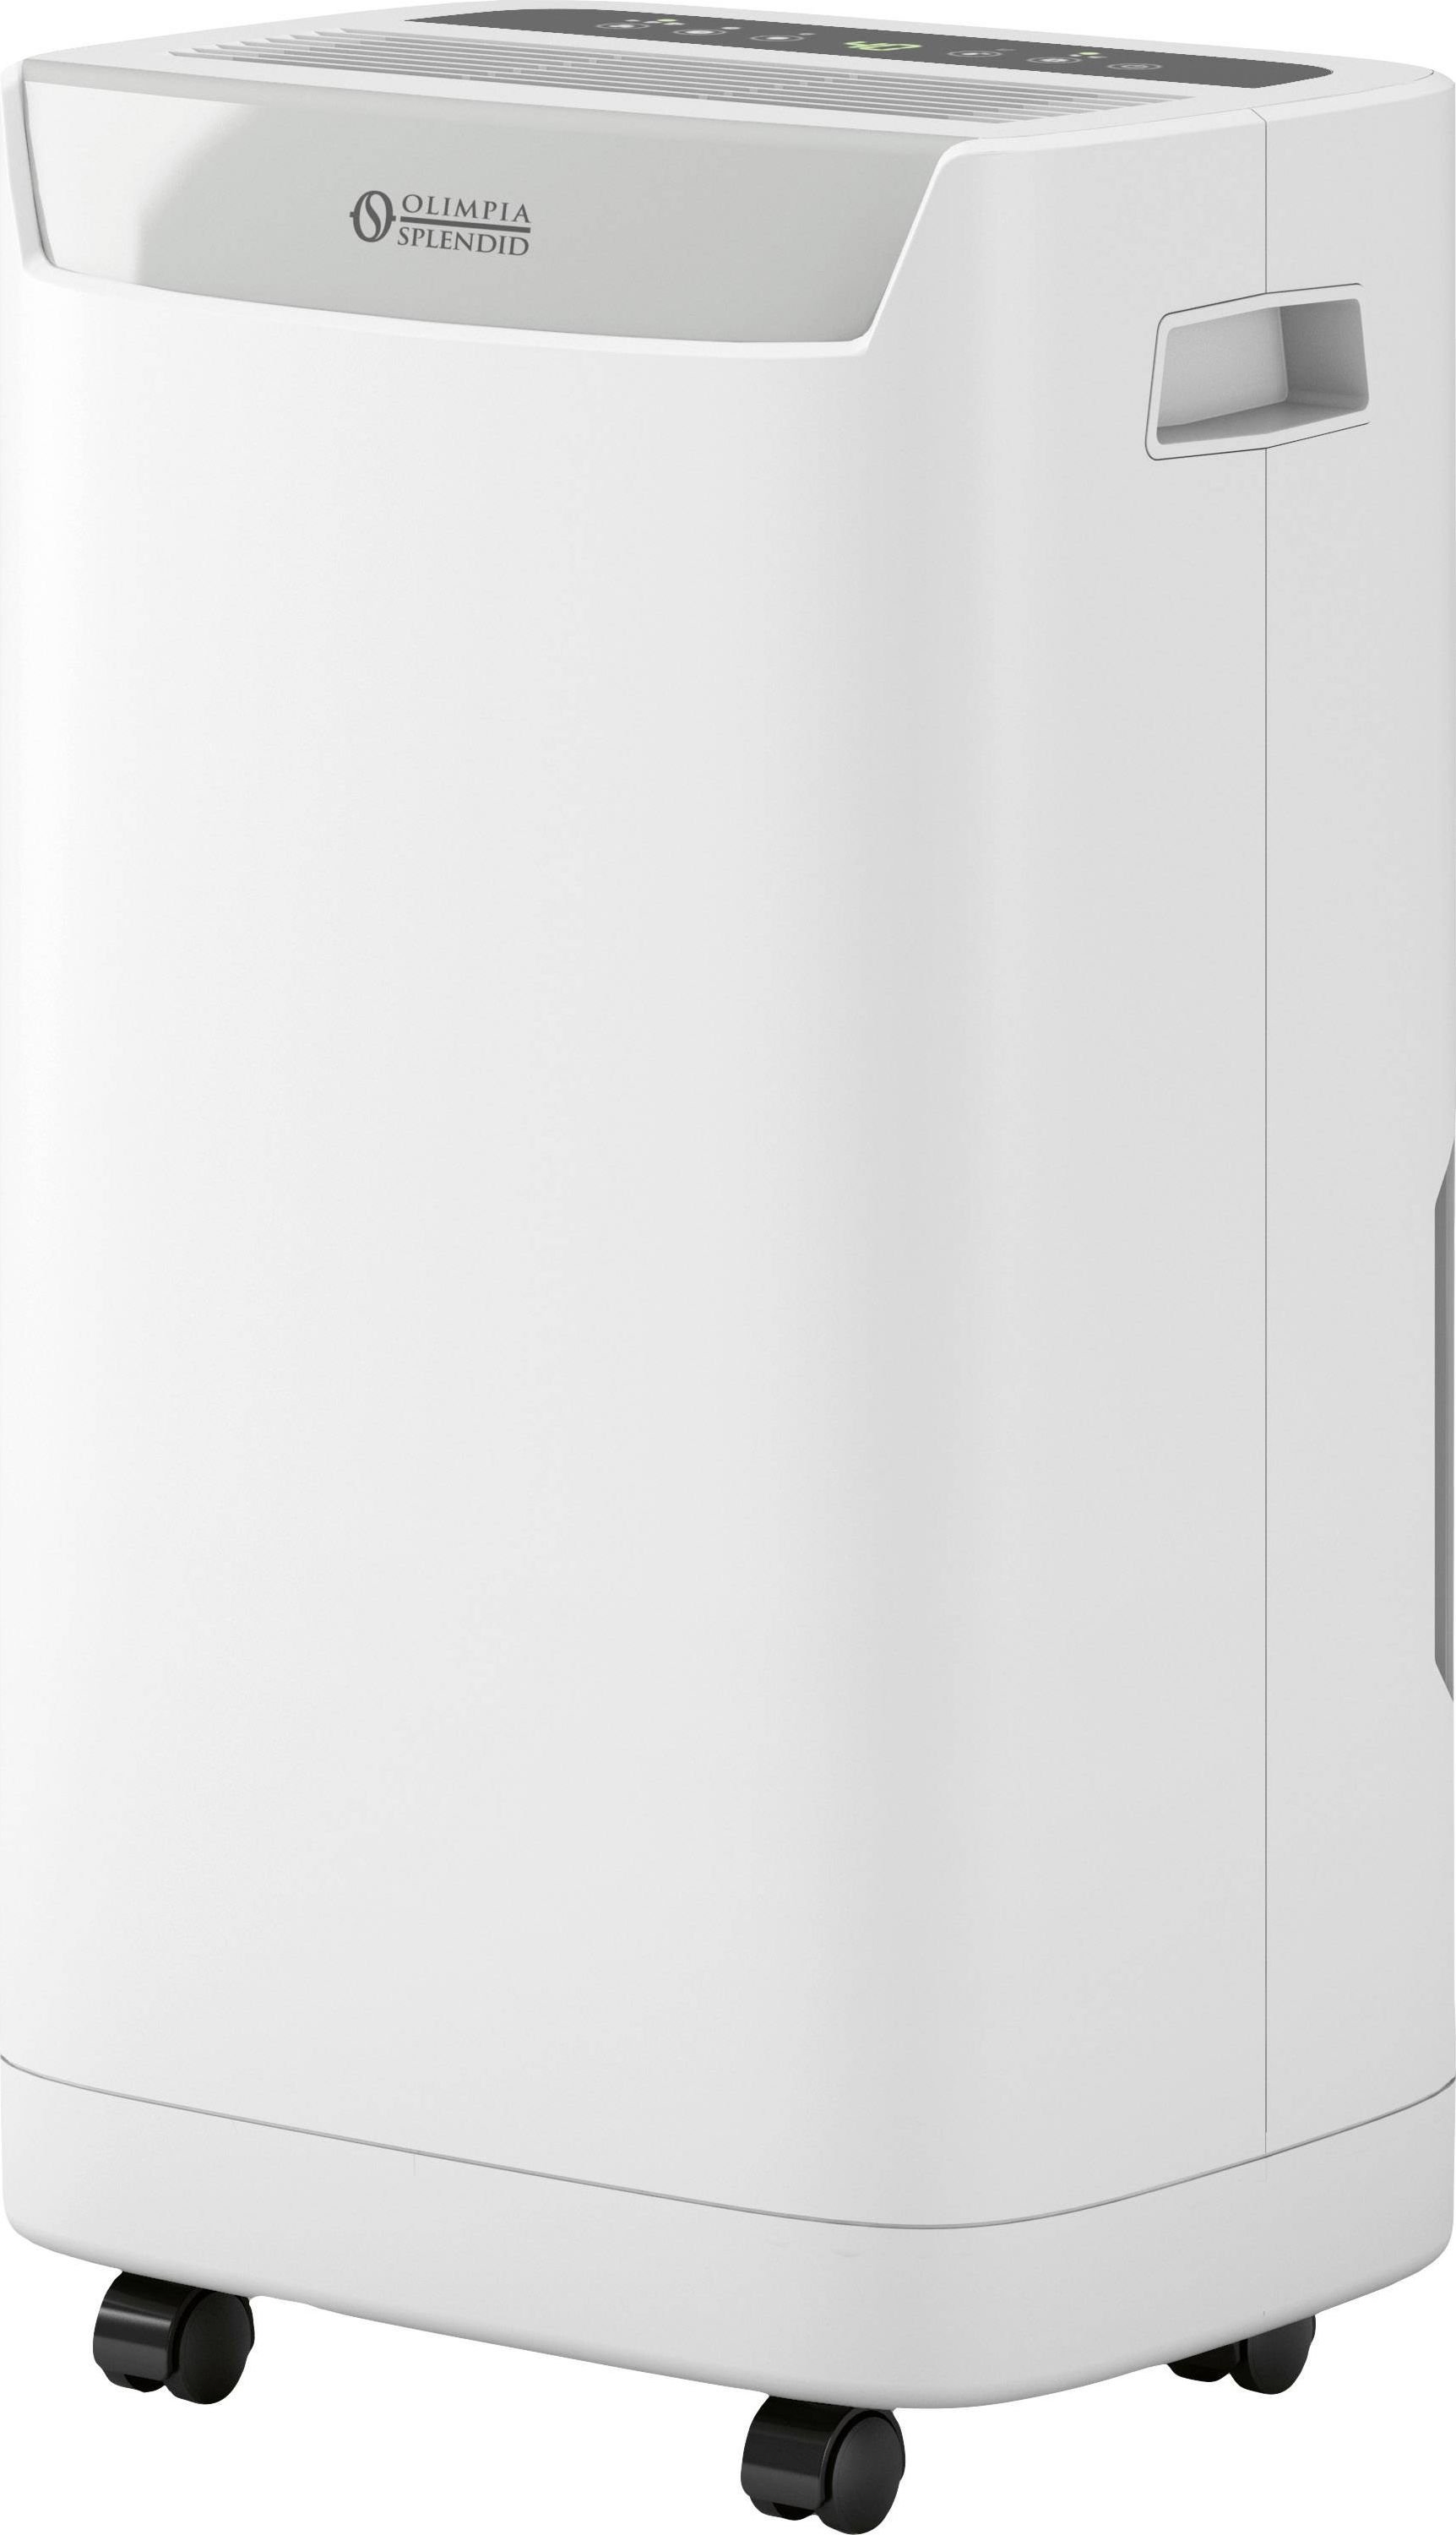 Dezumidificatoare - Dezumidificator de aer  Olimpia Splendid Aquaria S1 16P,350 W,20 m2,2 l,alb